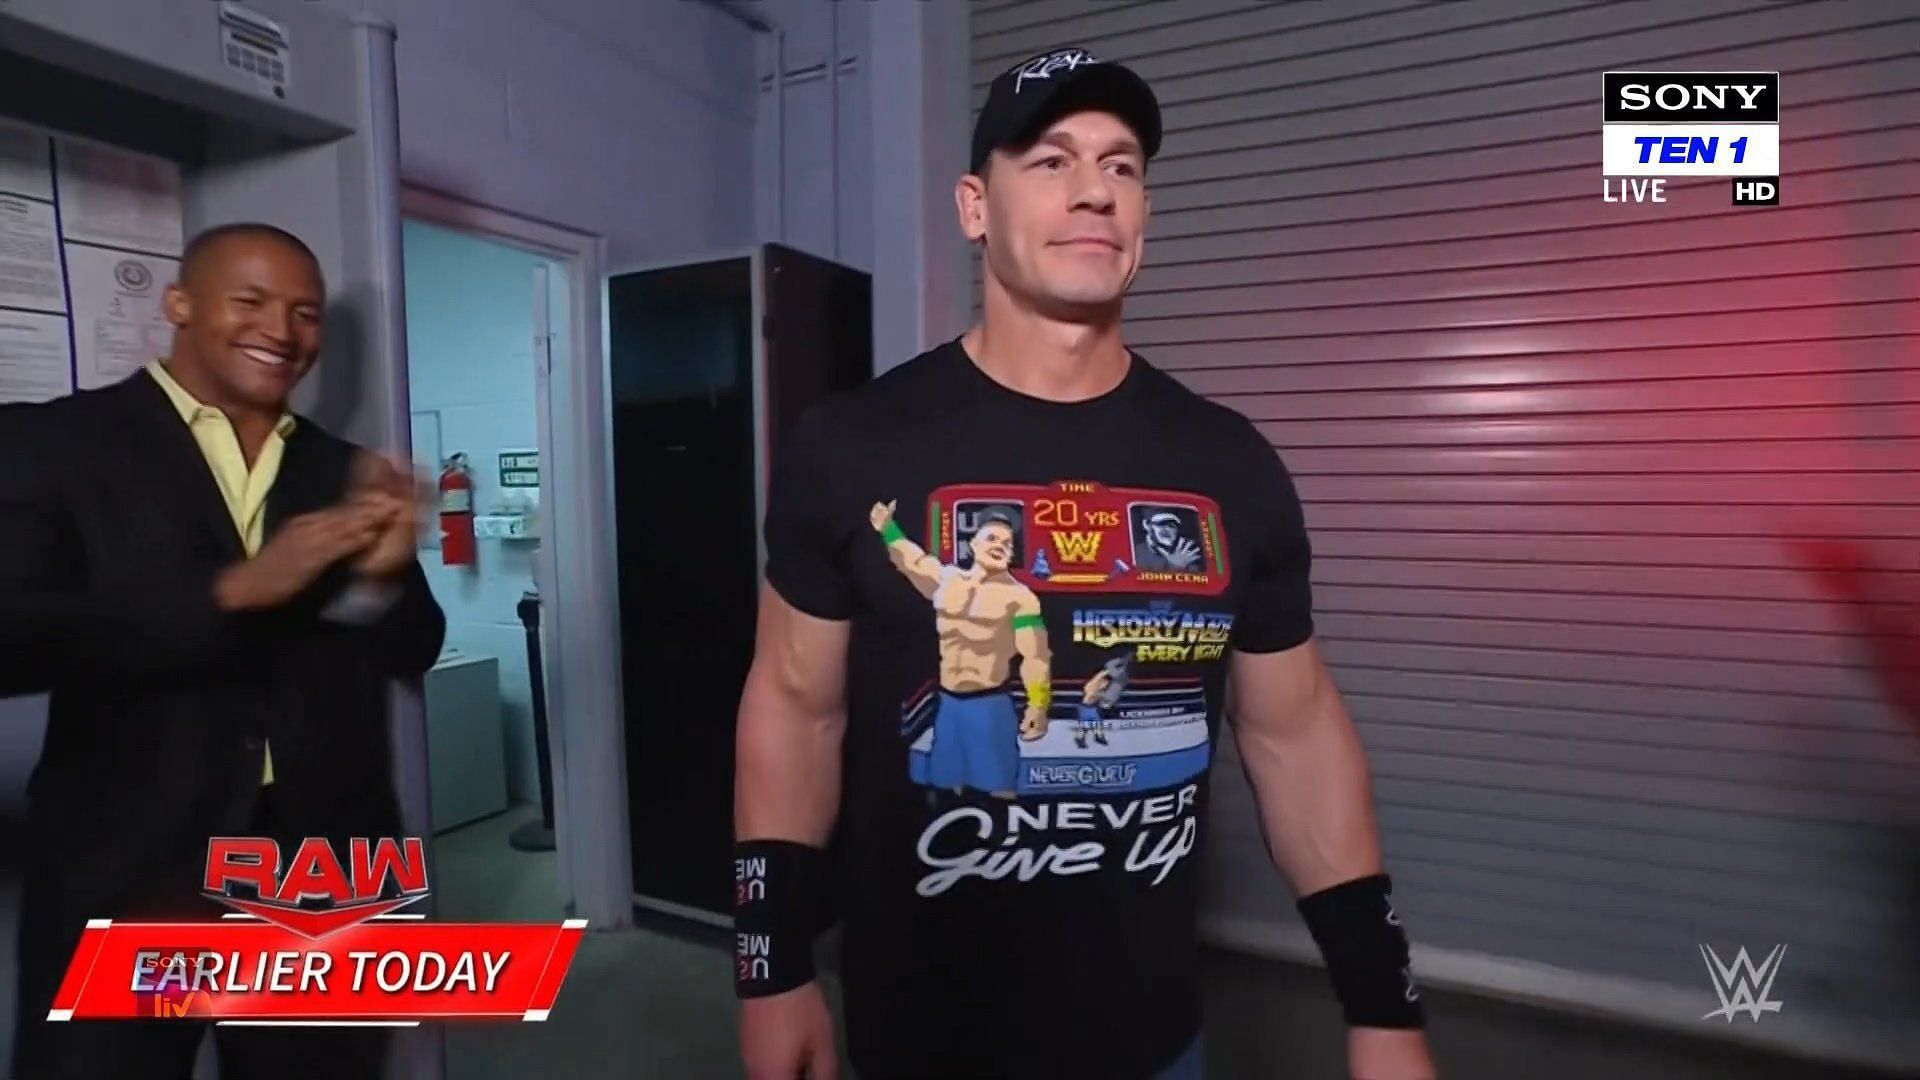 John Cena arriving at the Sames Center tonight on WWE RAW